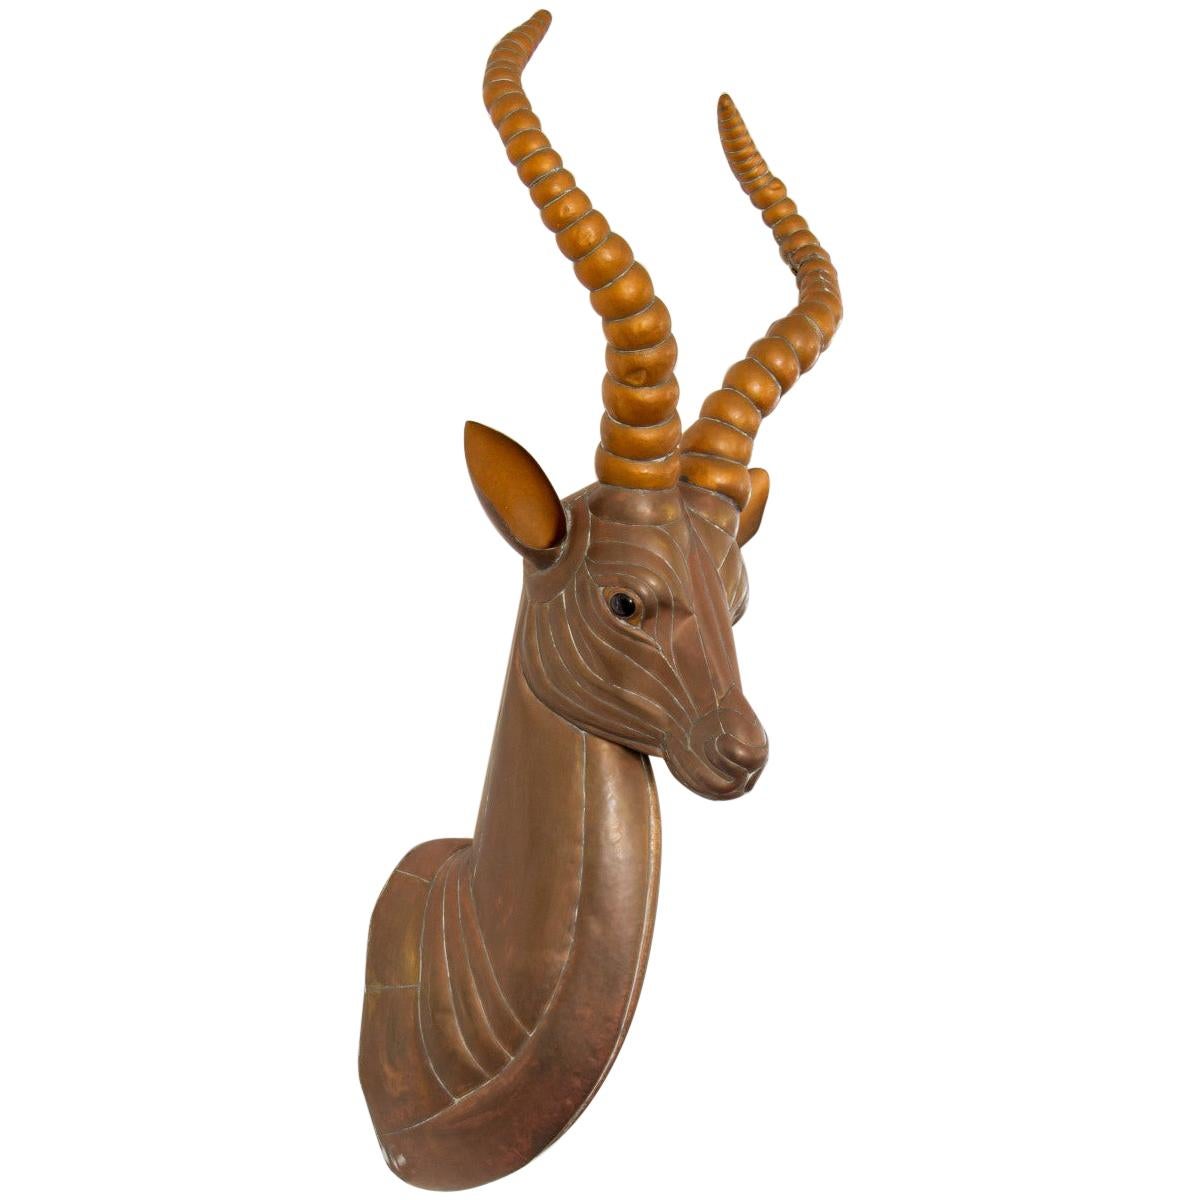 Antelope Head Sculpture by Sergio Bustamante, 1970s